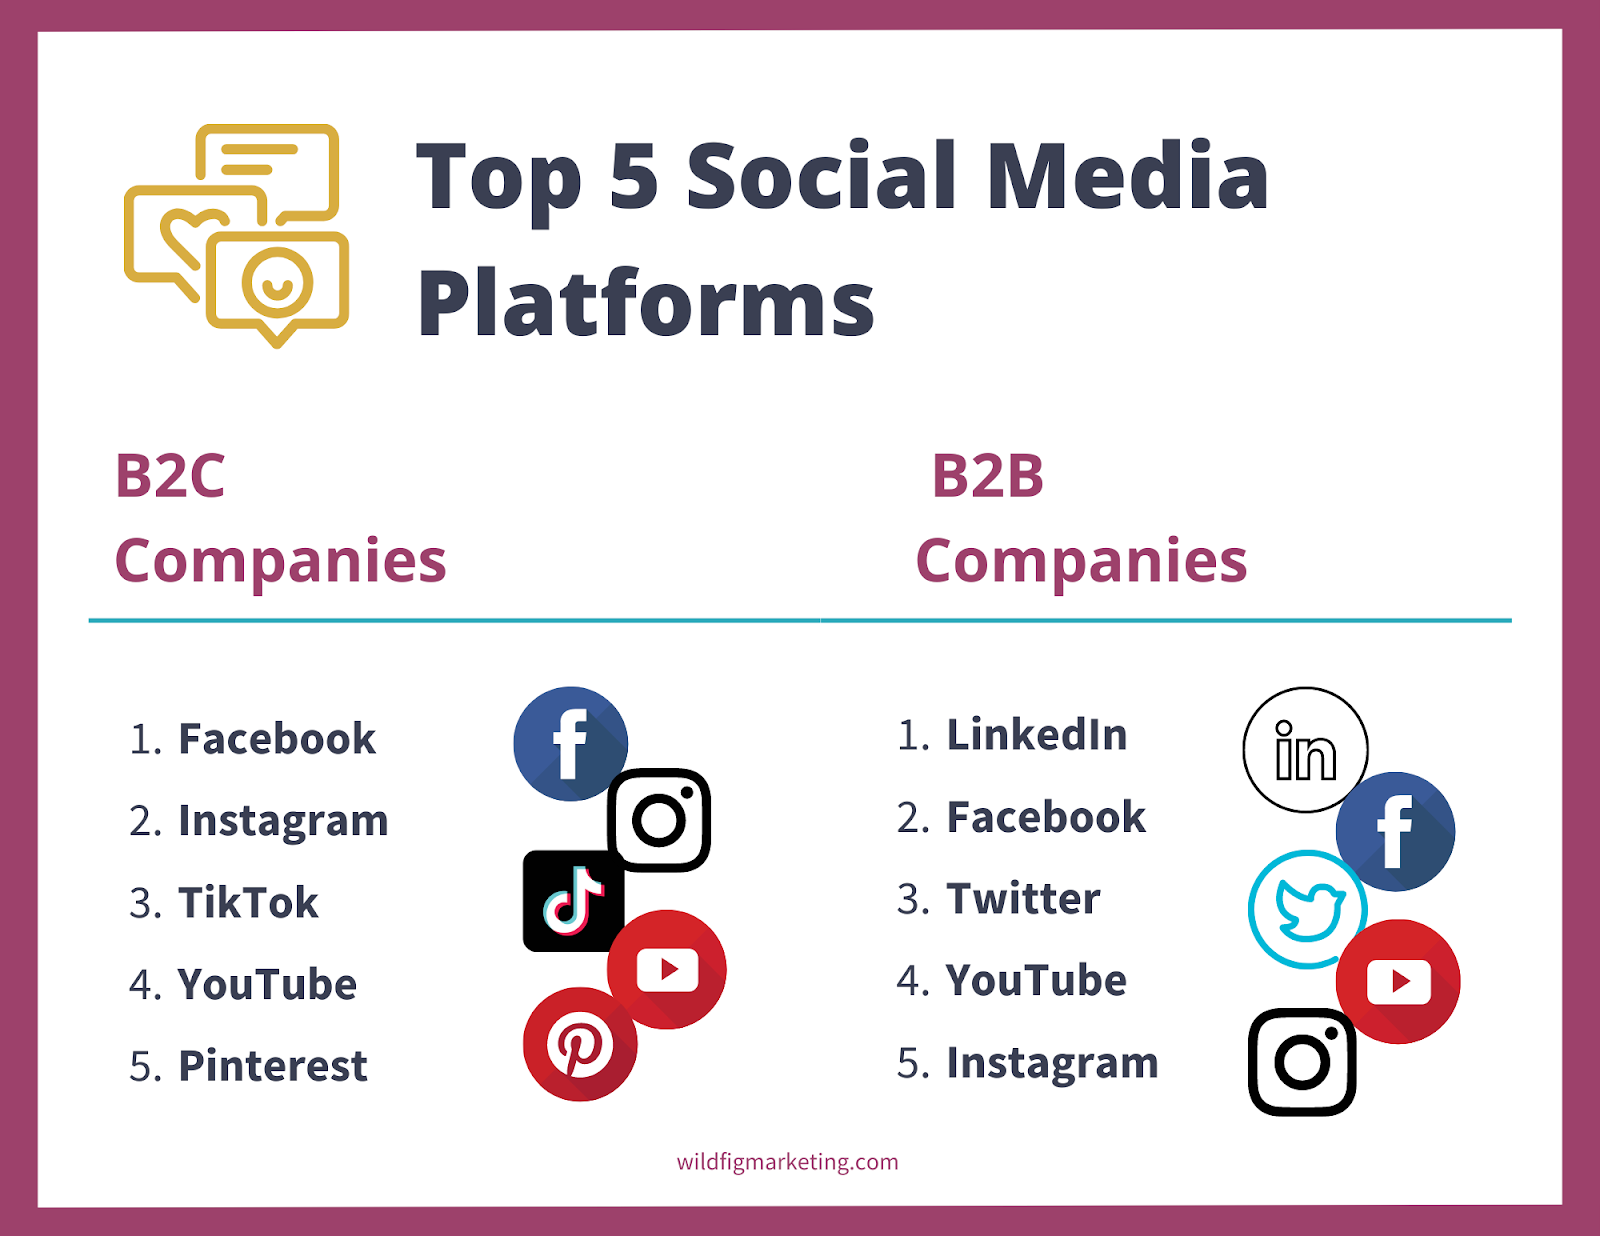 Top 5 Social Media Platforms for Businesses